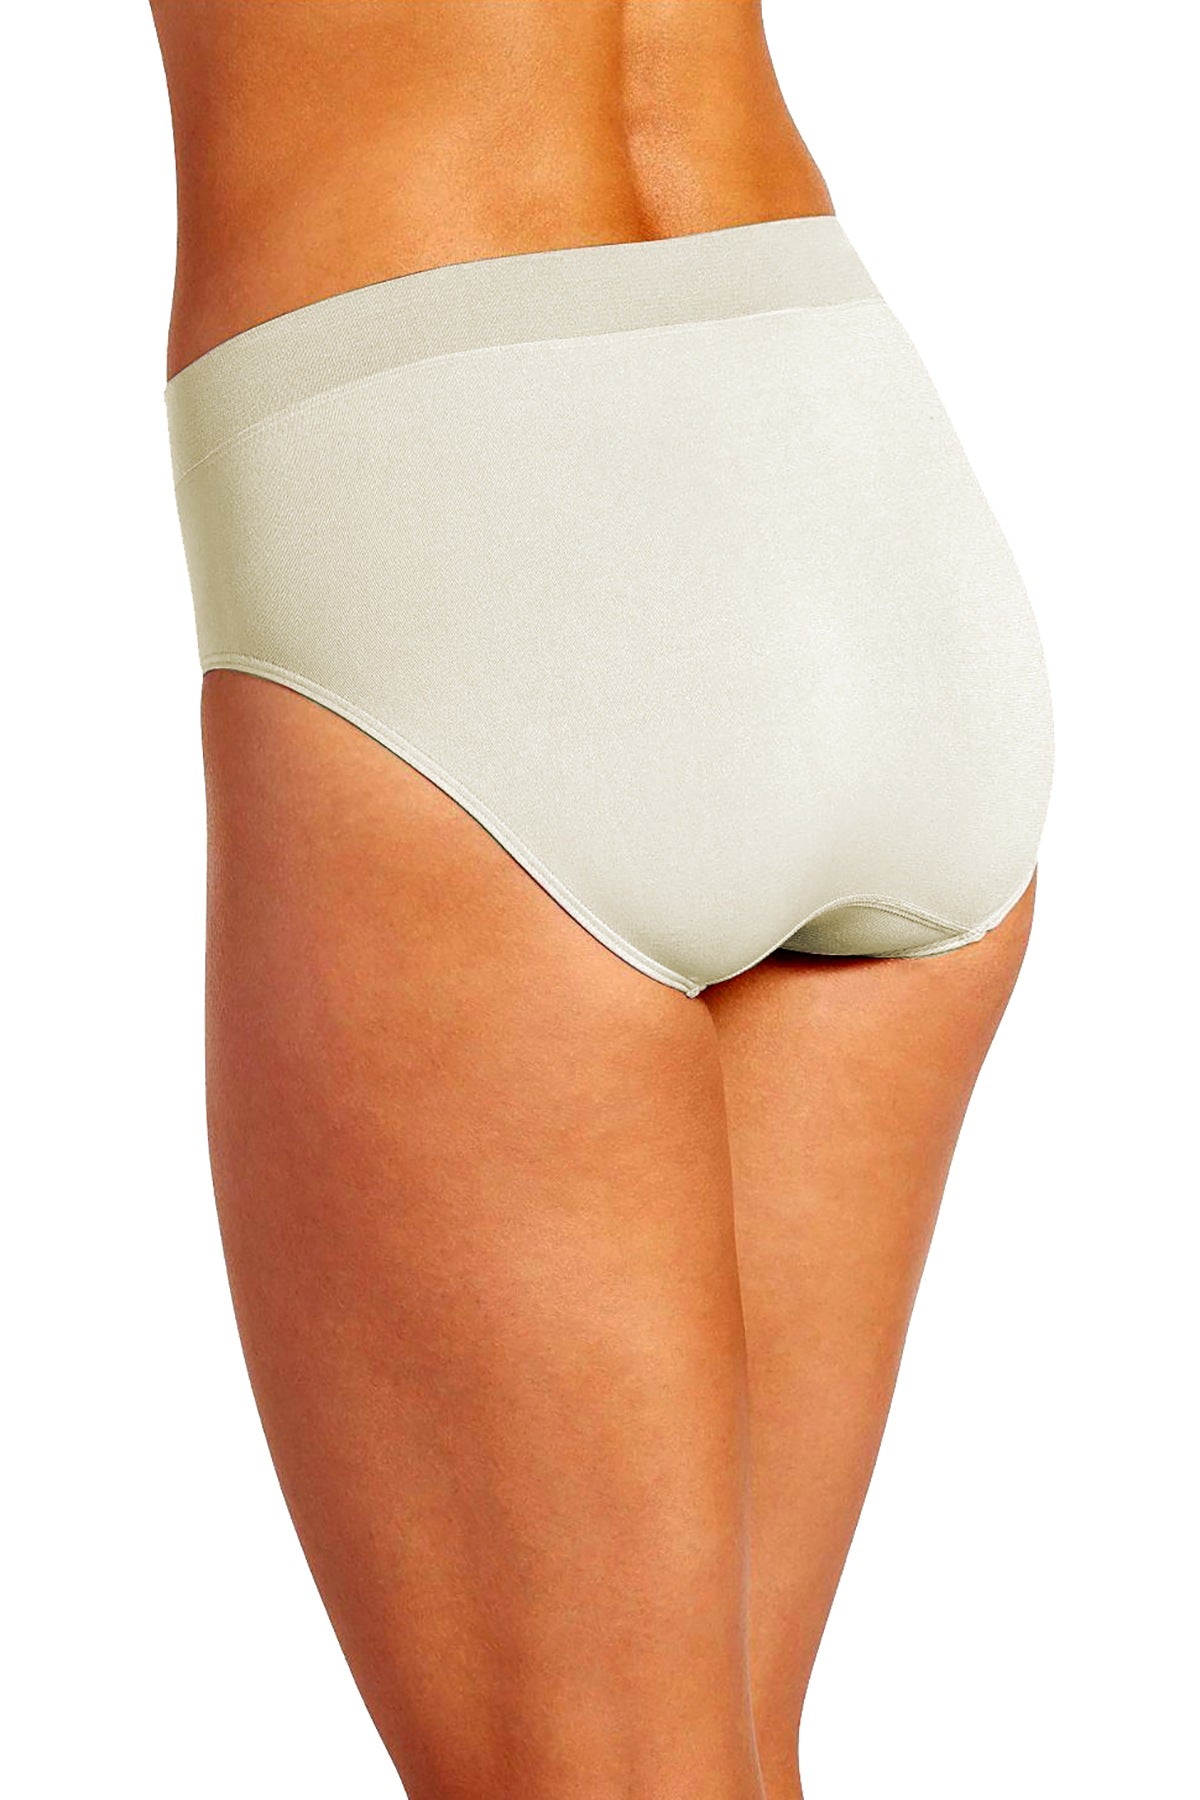 Jockey Microfiber High Cut Panty in Sandy Shimmer